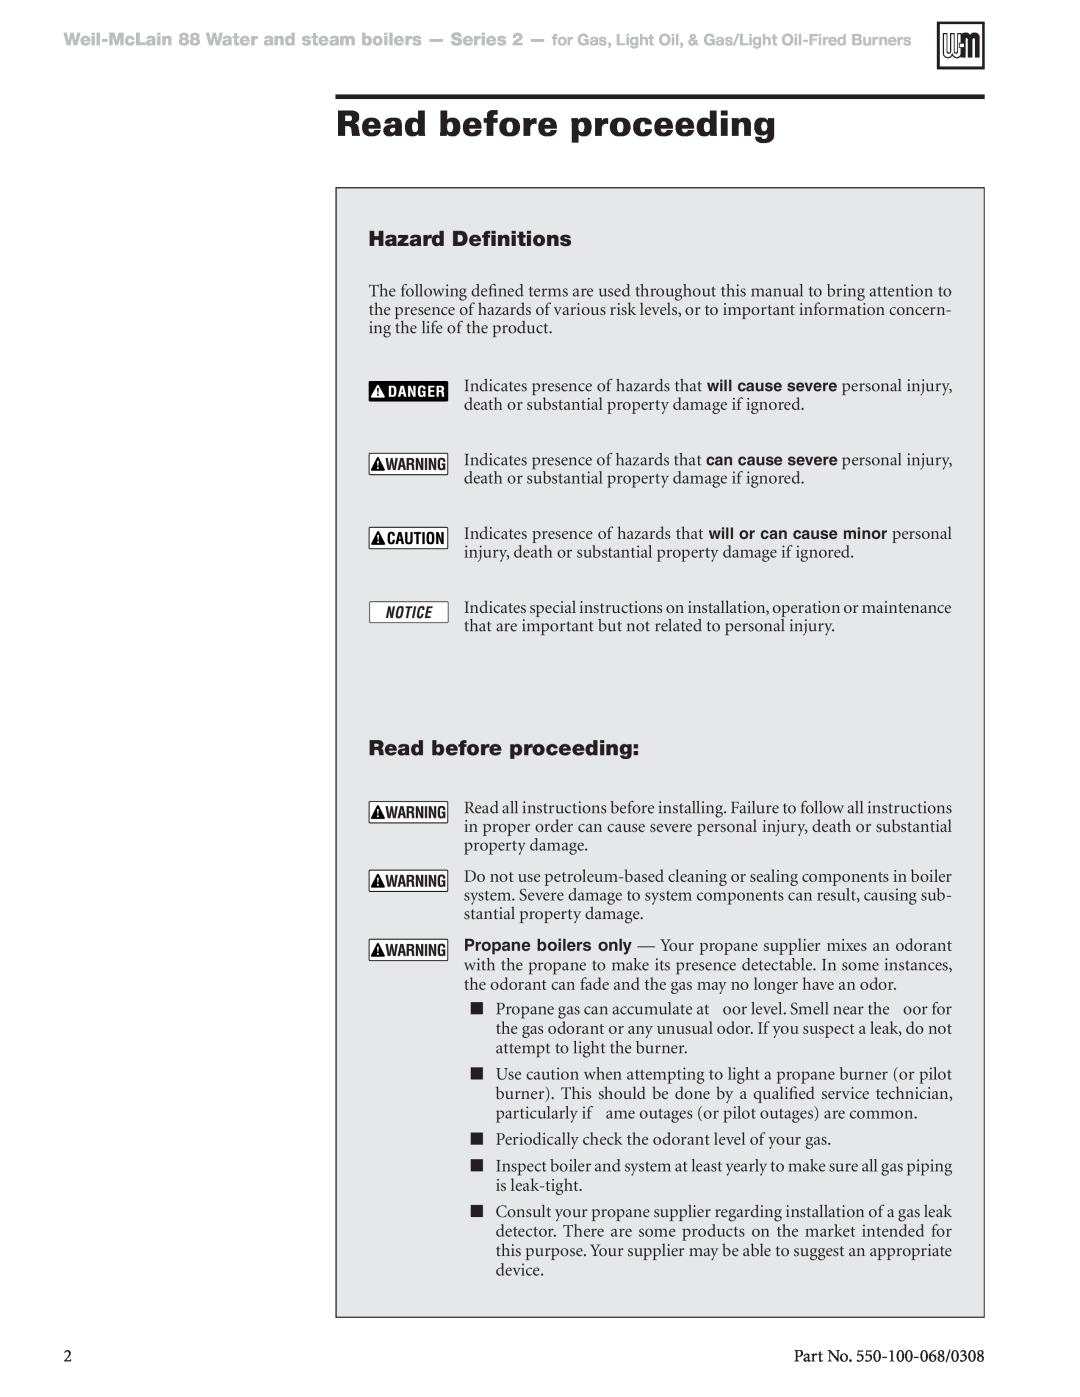 Weil-McLain 88 manual Read before proceeding, Hazard Definitions 